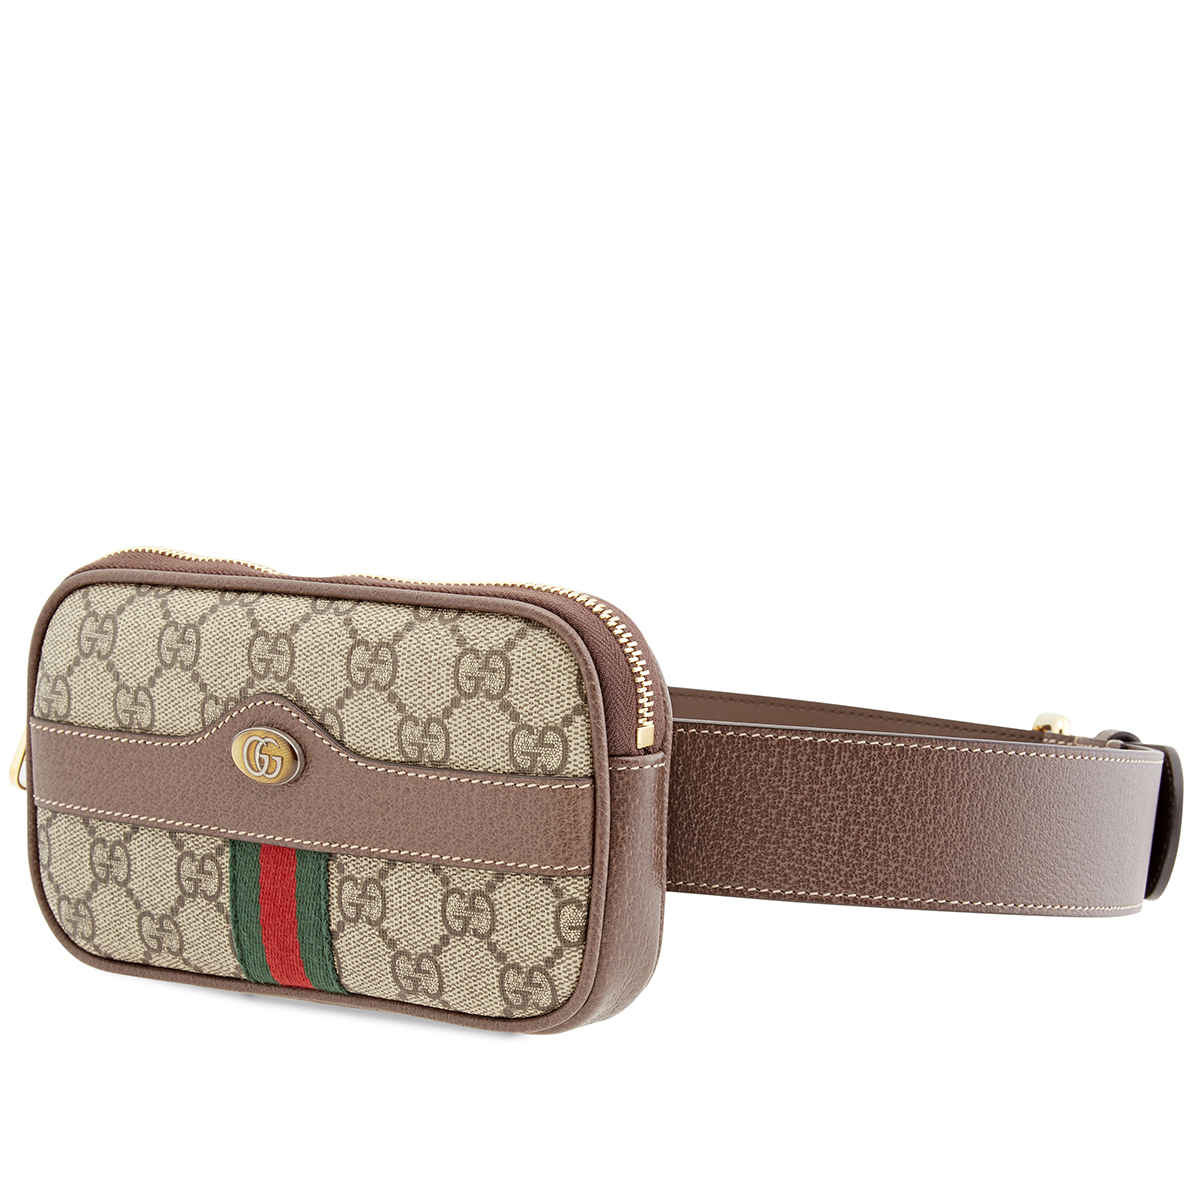 Gucci Ophidia GG Supreme Belt Bag Beige Ladies, Belt Size 85 CM 519308 96IWS | eBay